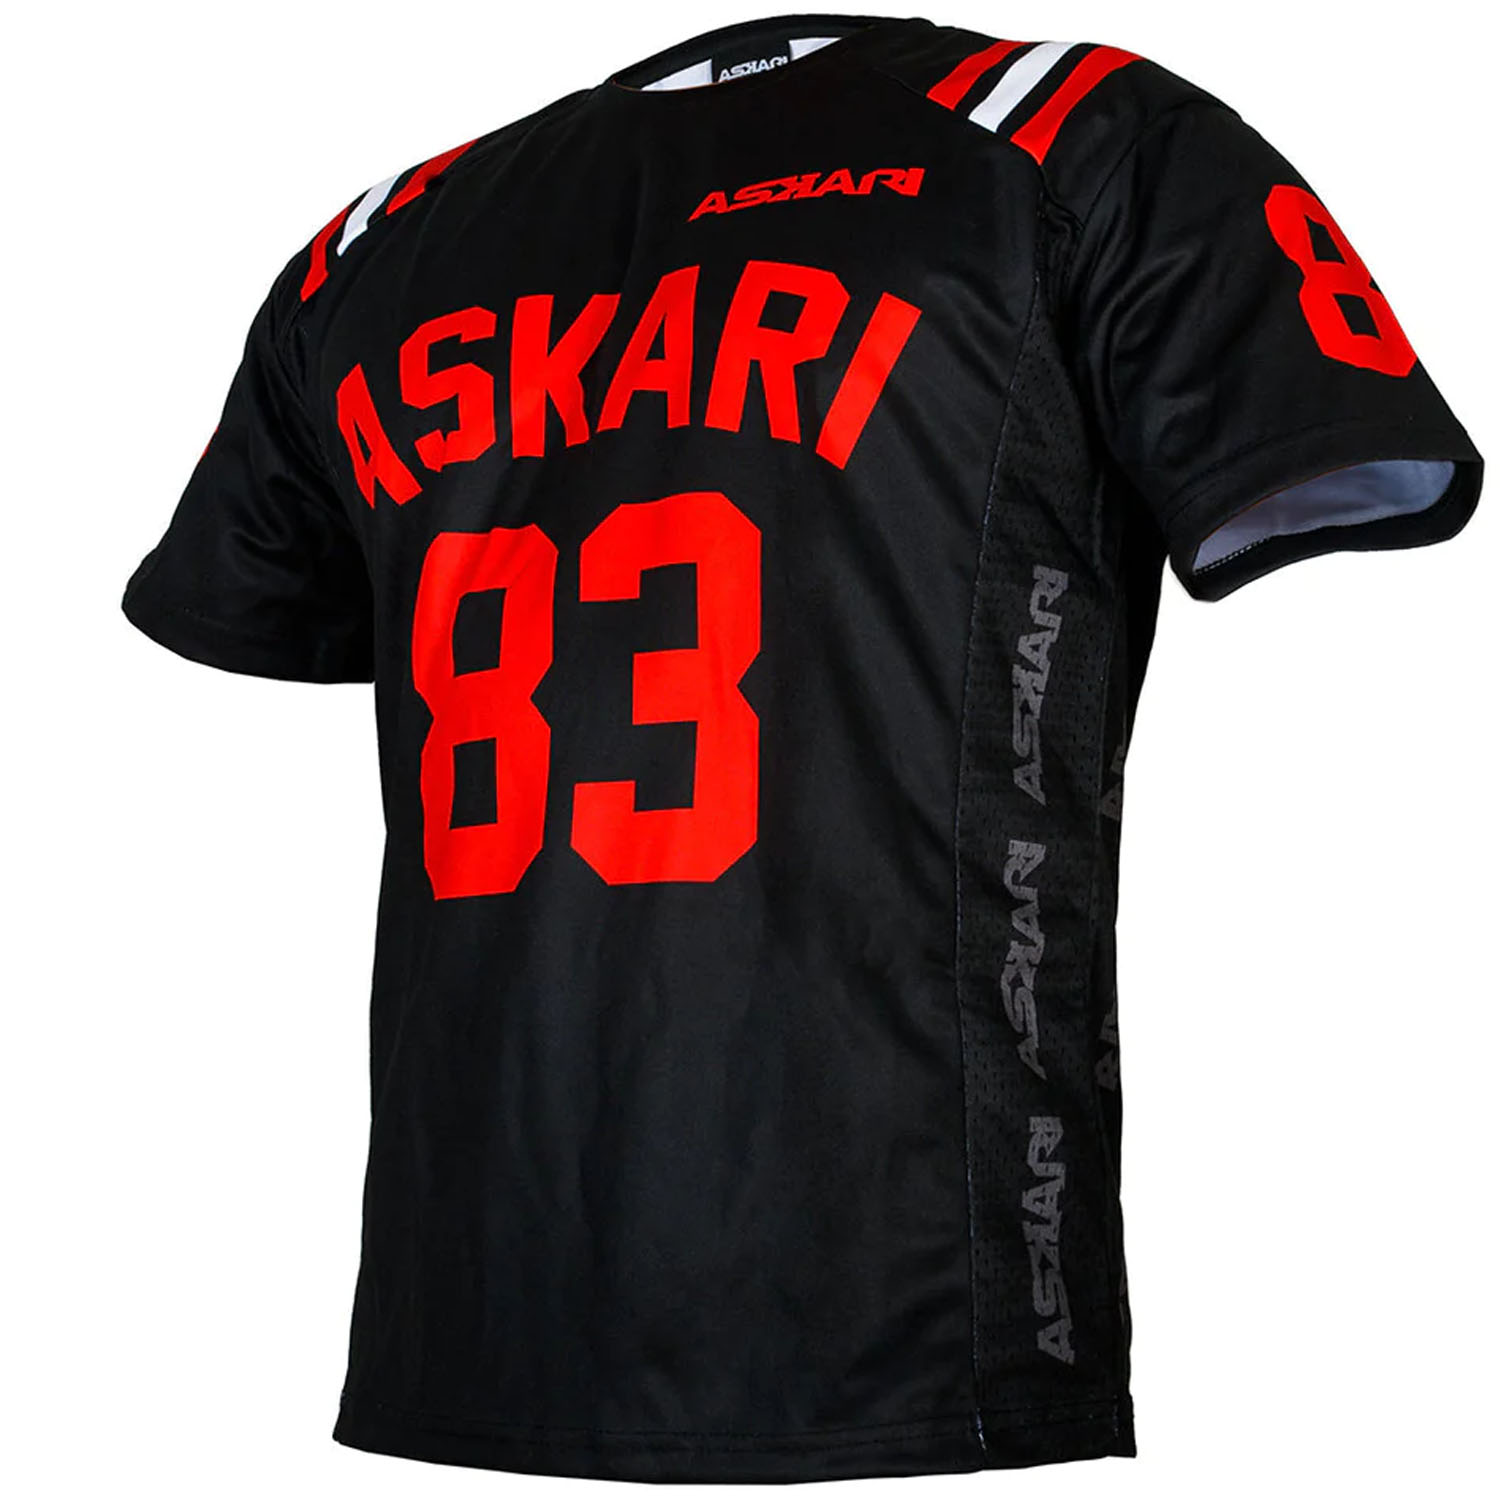 ASKARI, Fitness Shirt, Askari 83, schwarz-rot